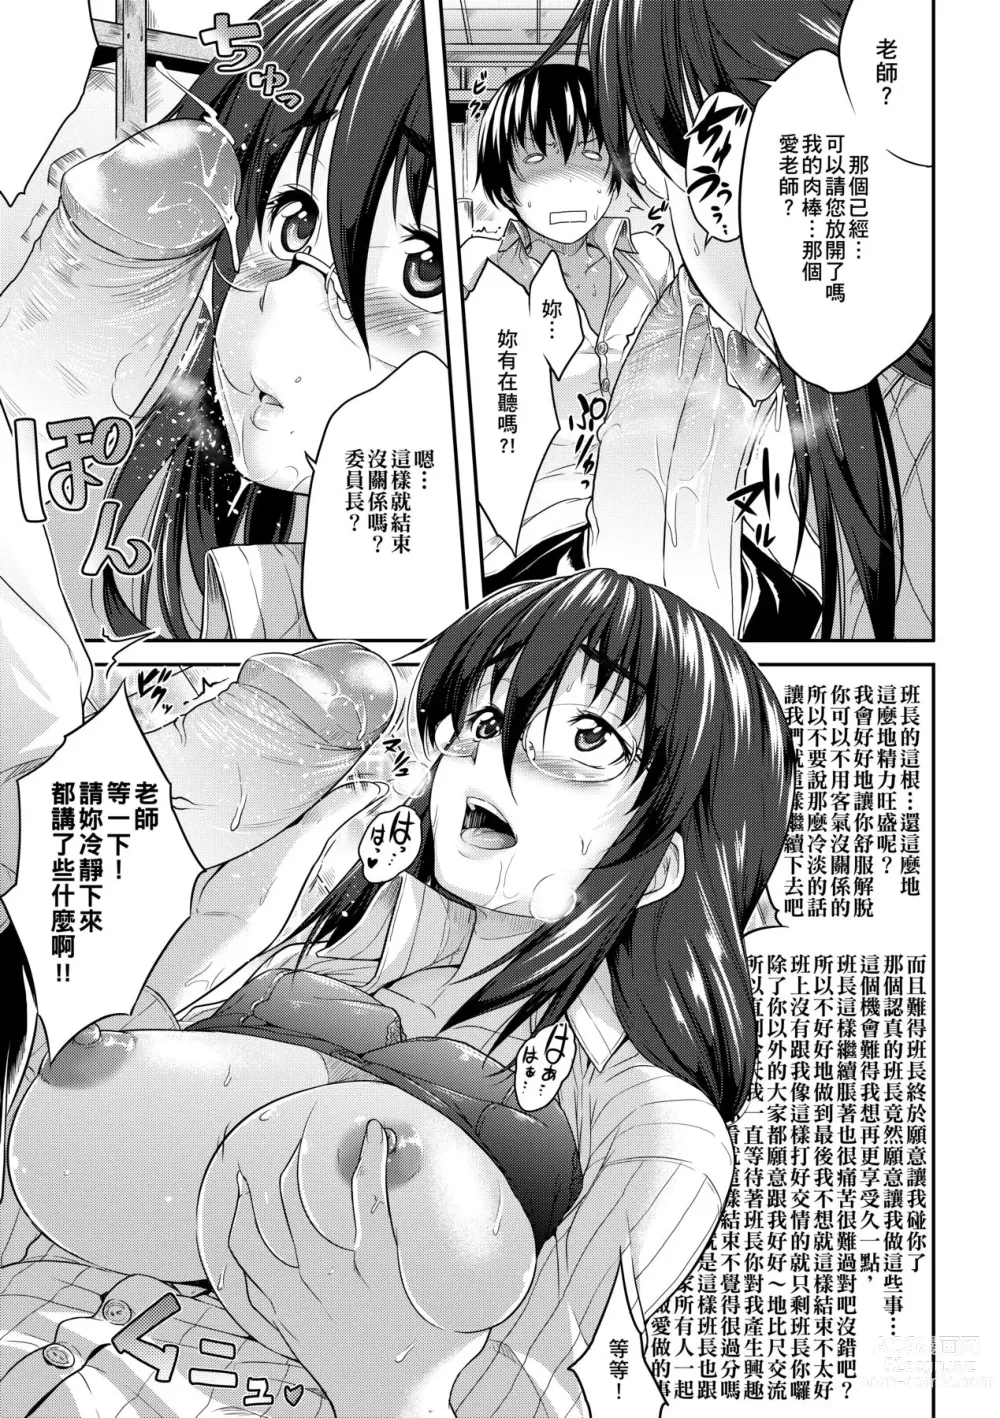 Page 204 of manga Megane no Shohousen (decensored)